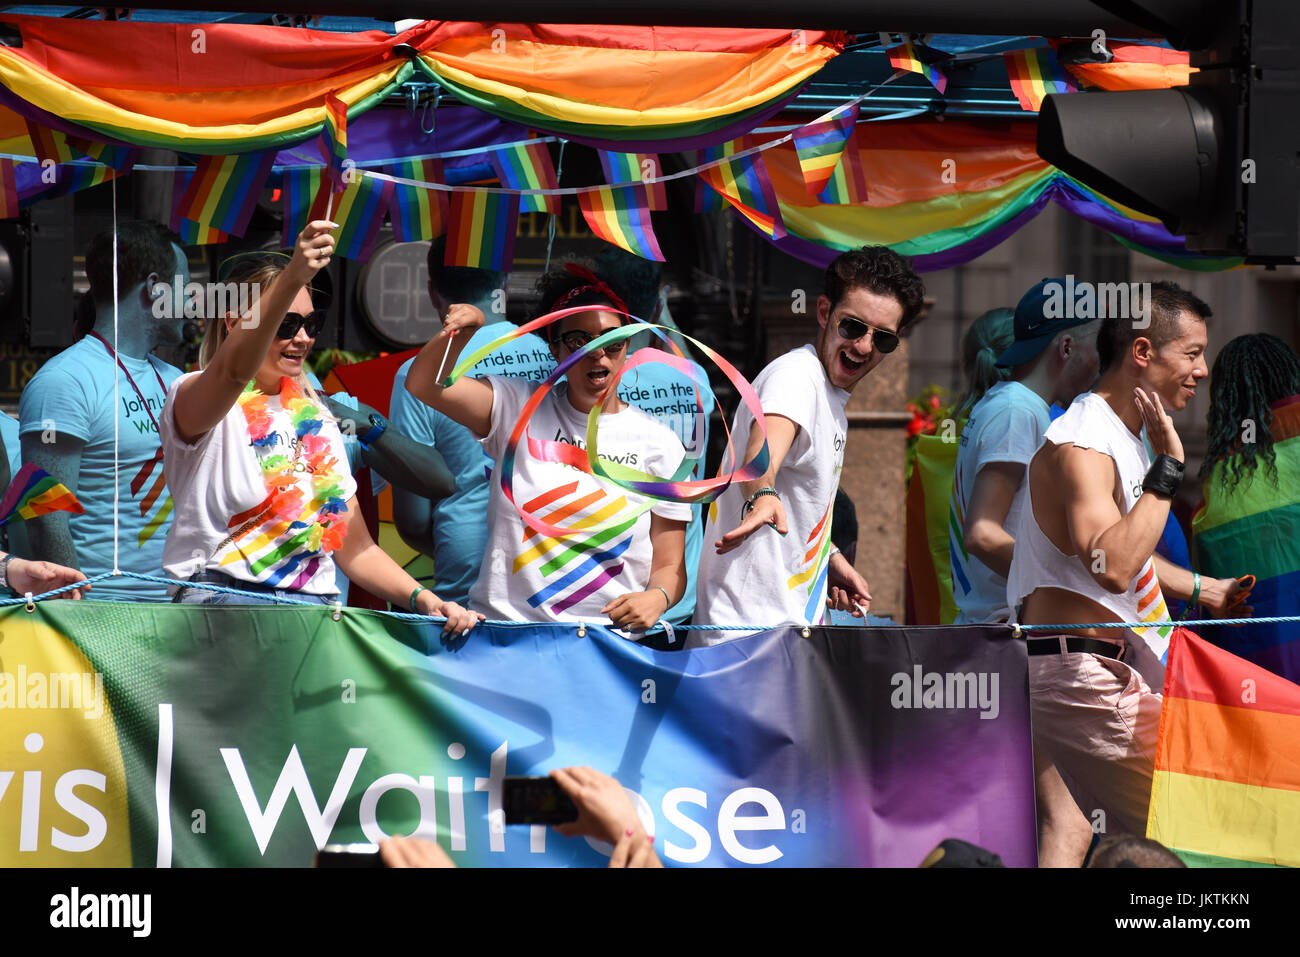 John Lewis Waitrose representatives on the rainbow truck at the Pride in London parade, 2017. Stock Photo